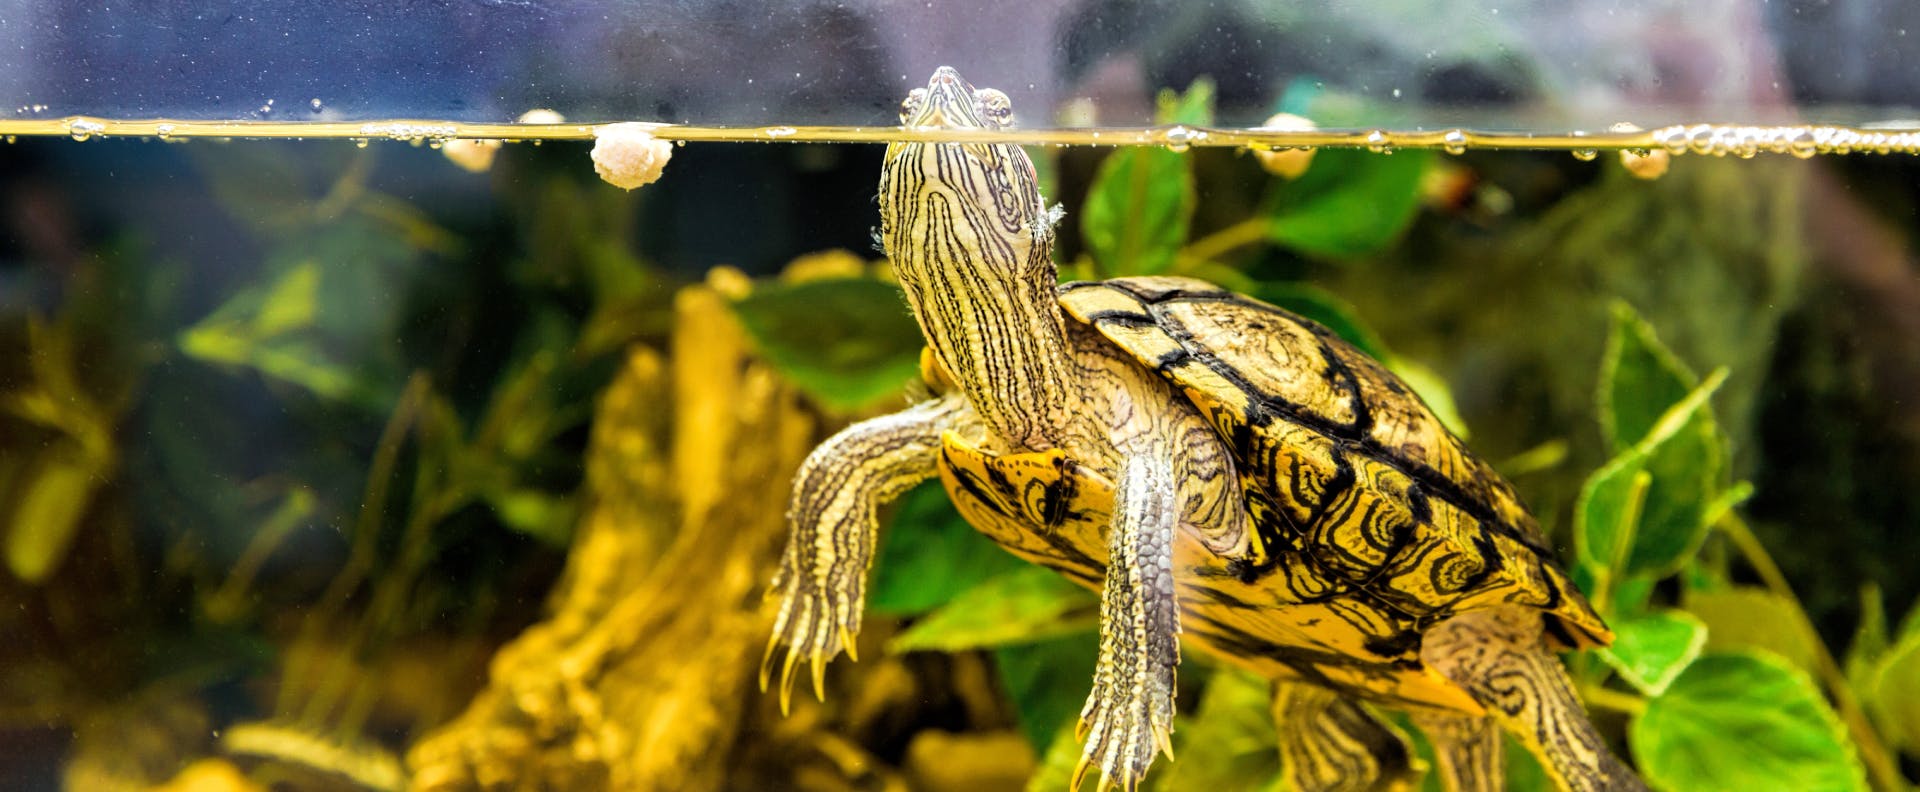 a swimming terrapin in a pet reptile tank